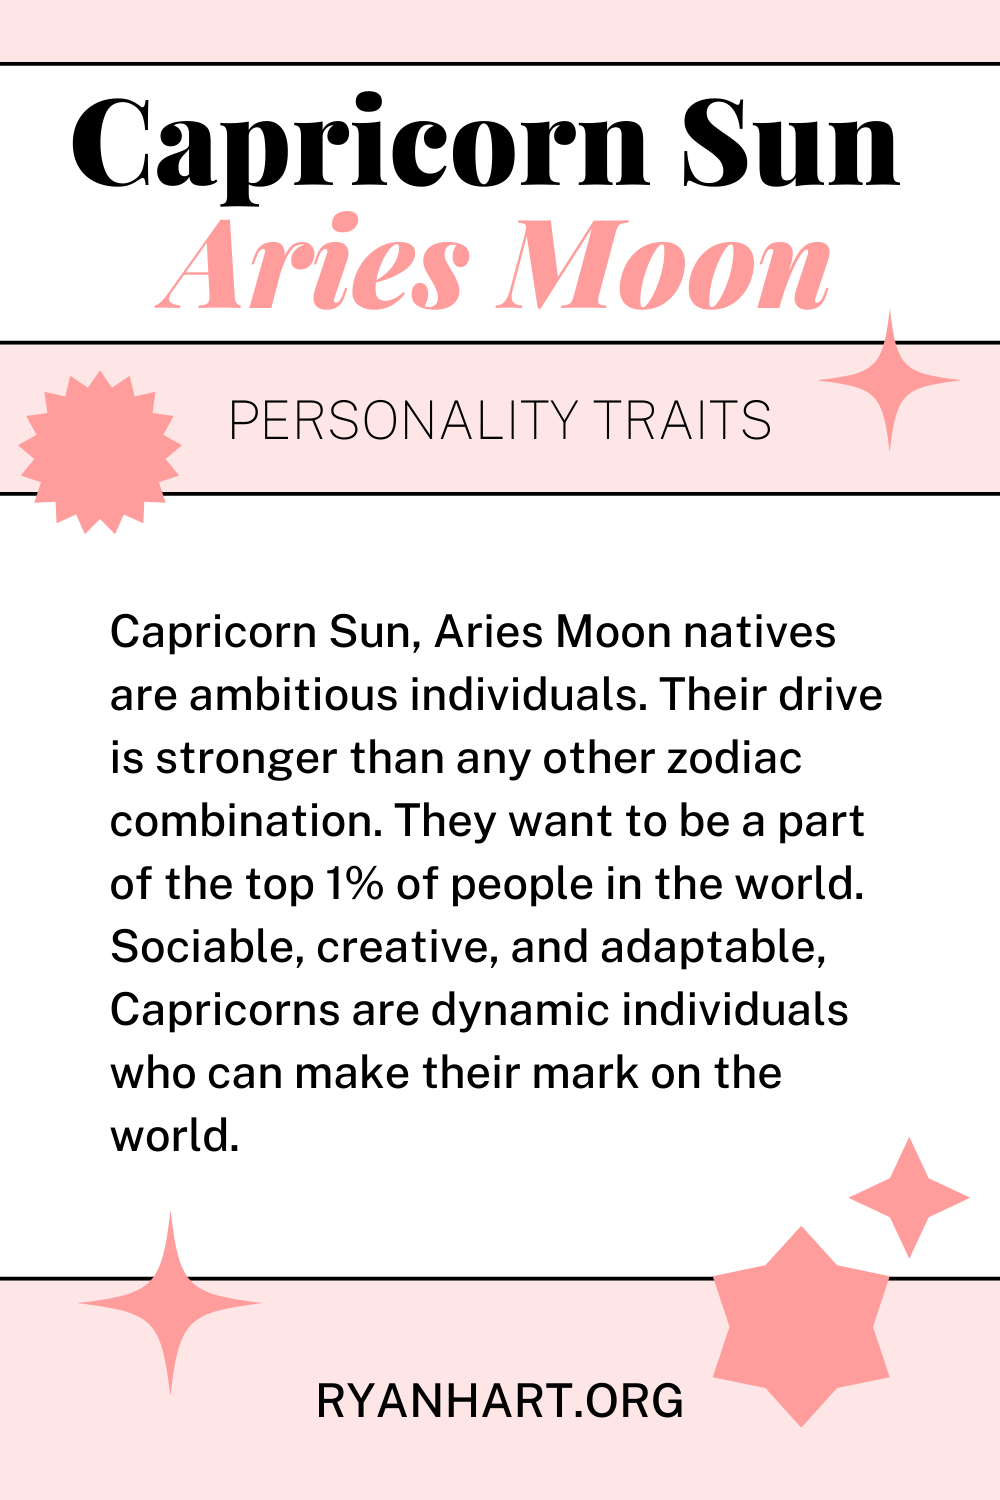 Capricorn Sun Aries Moon Description